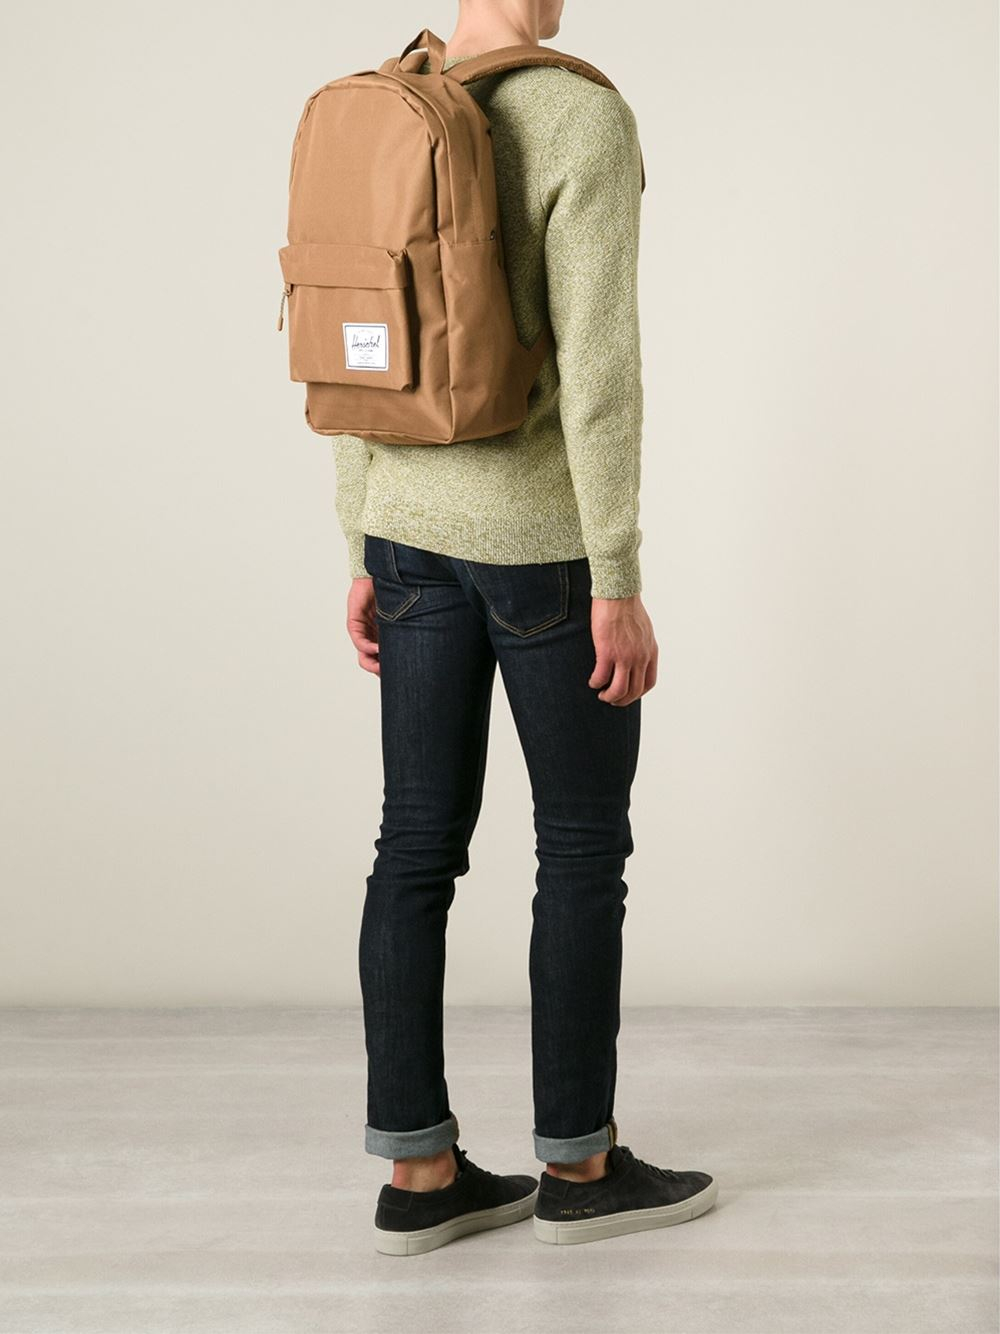 Herschel Supply Co. Classic Backpack in Brown for Men - Lyst